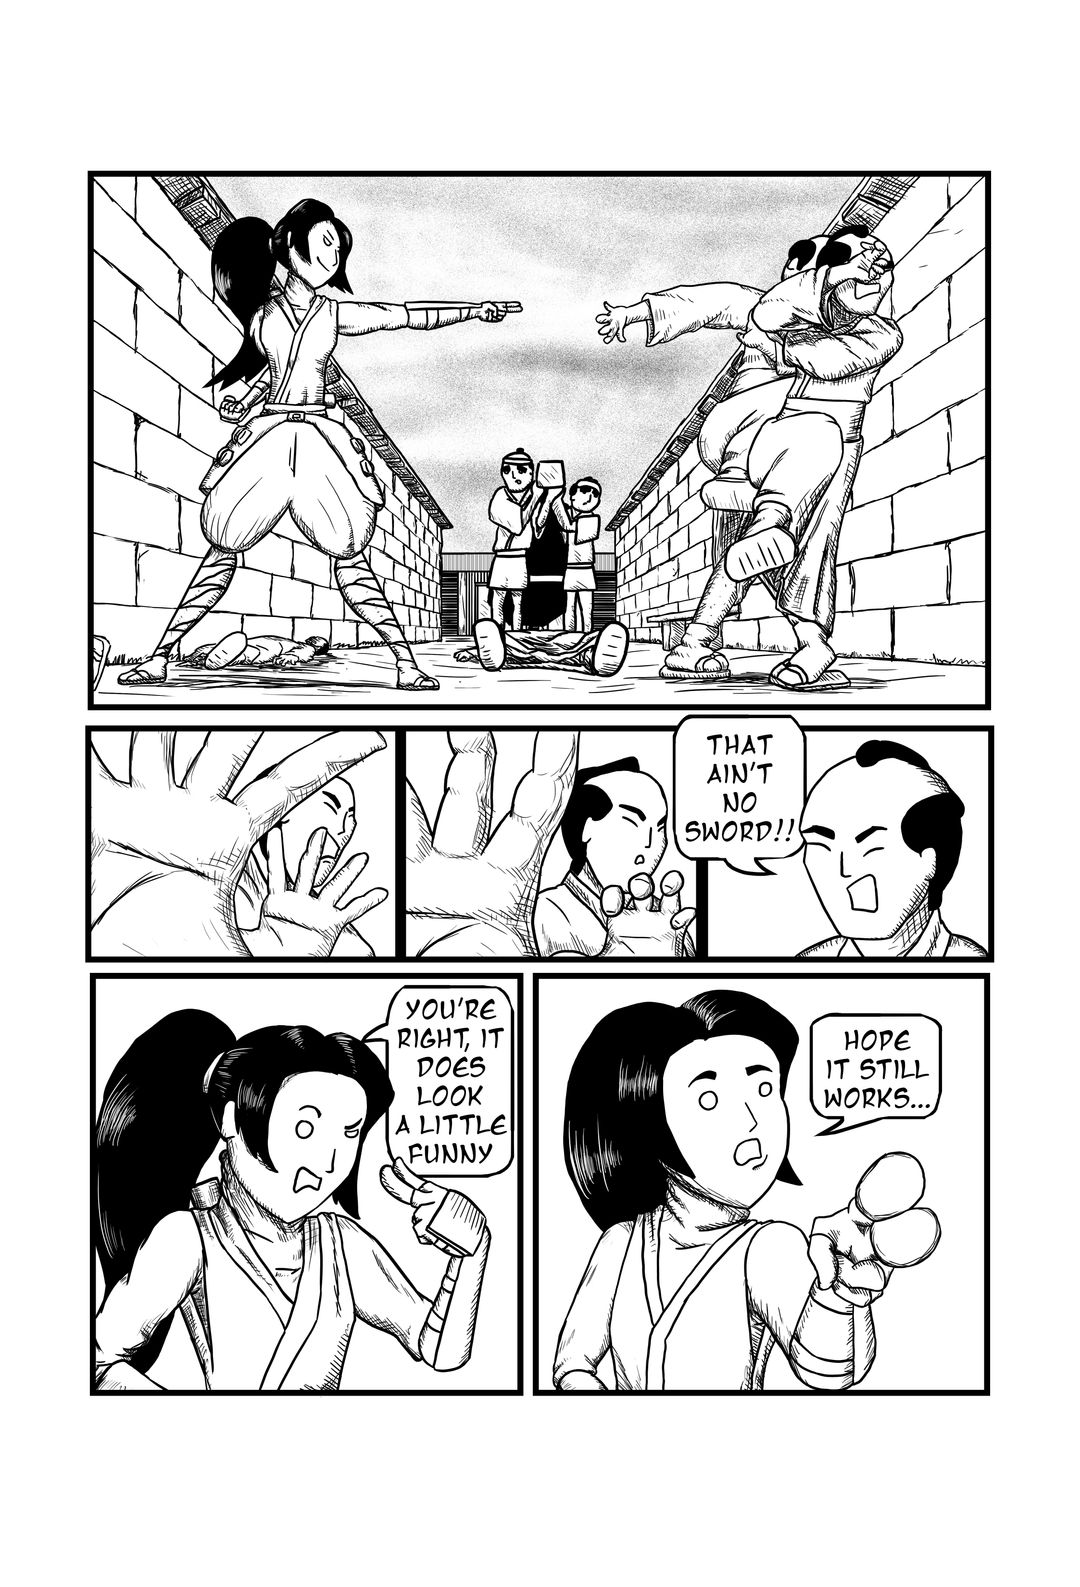 Shotgun Samurai 09 panel 2